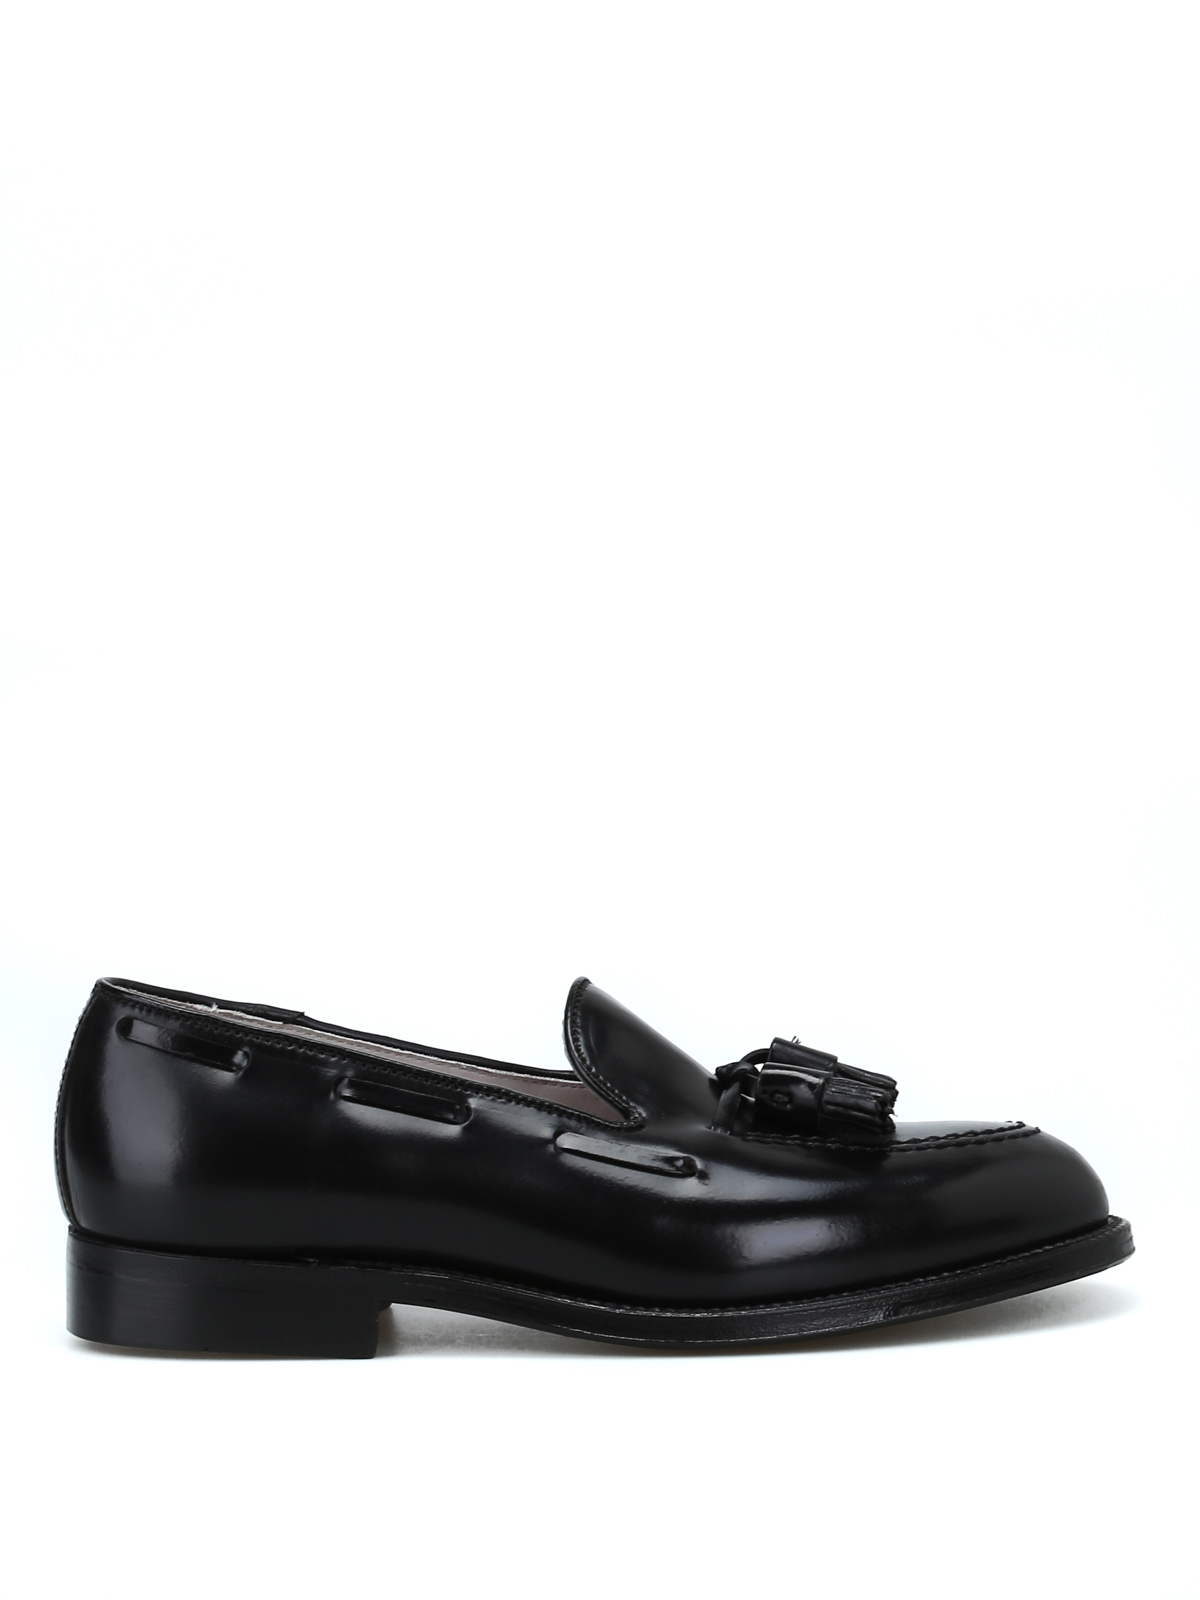 Loafers & Slippers Alden - Horween black brushed leather loafers - 664